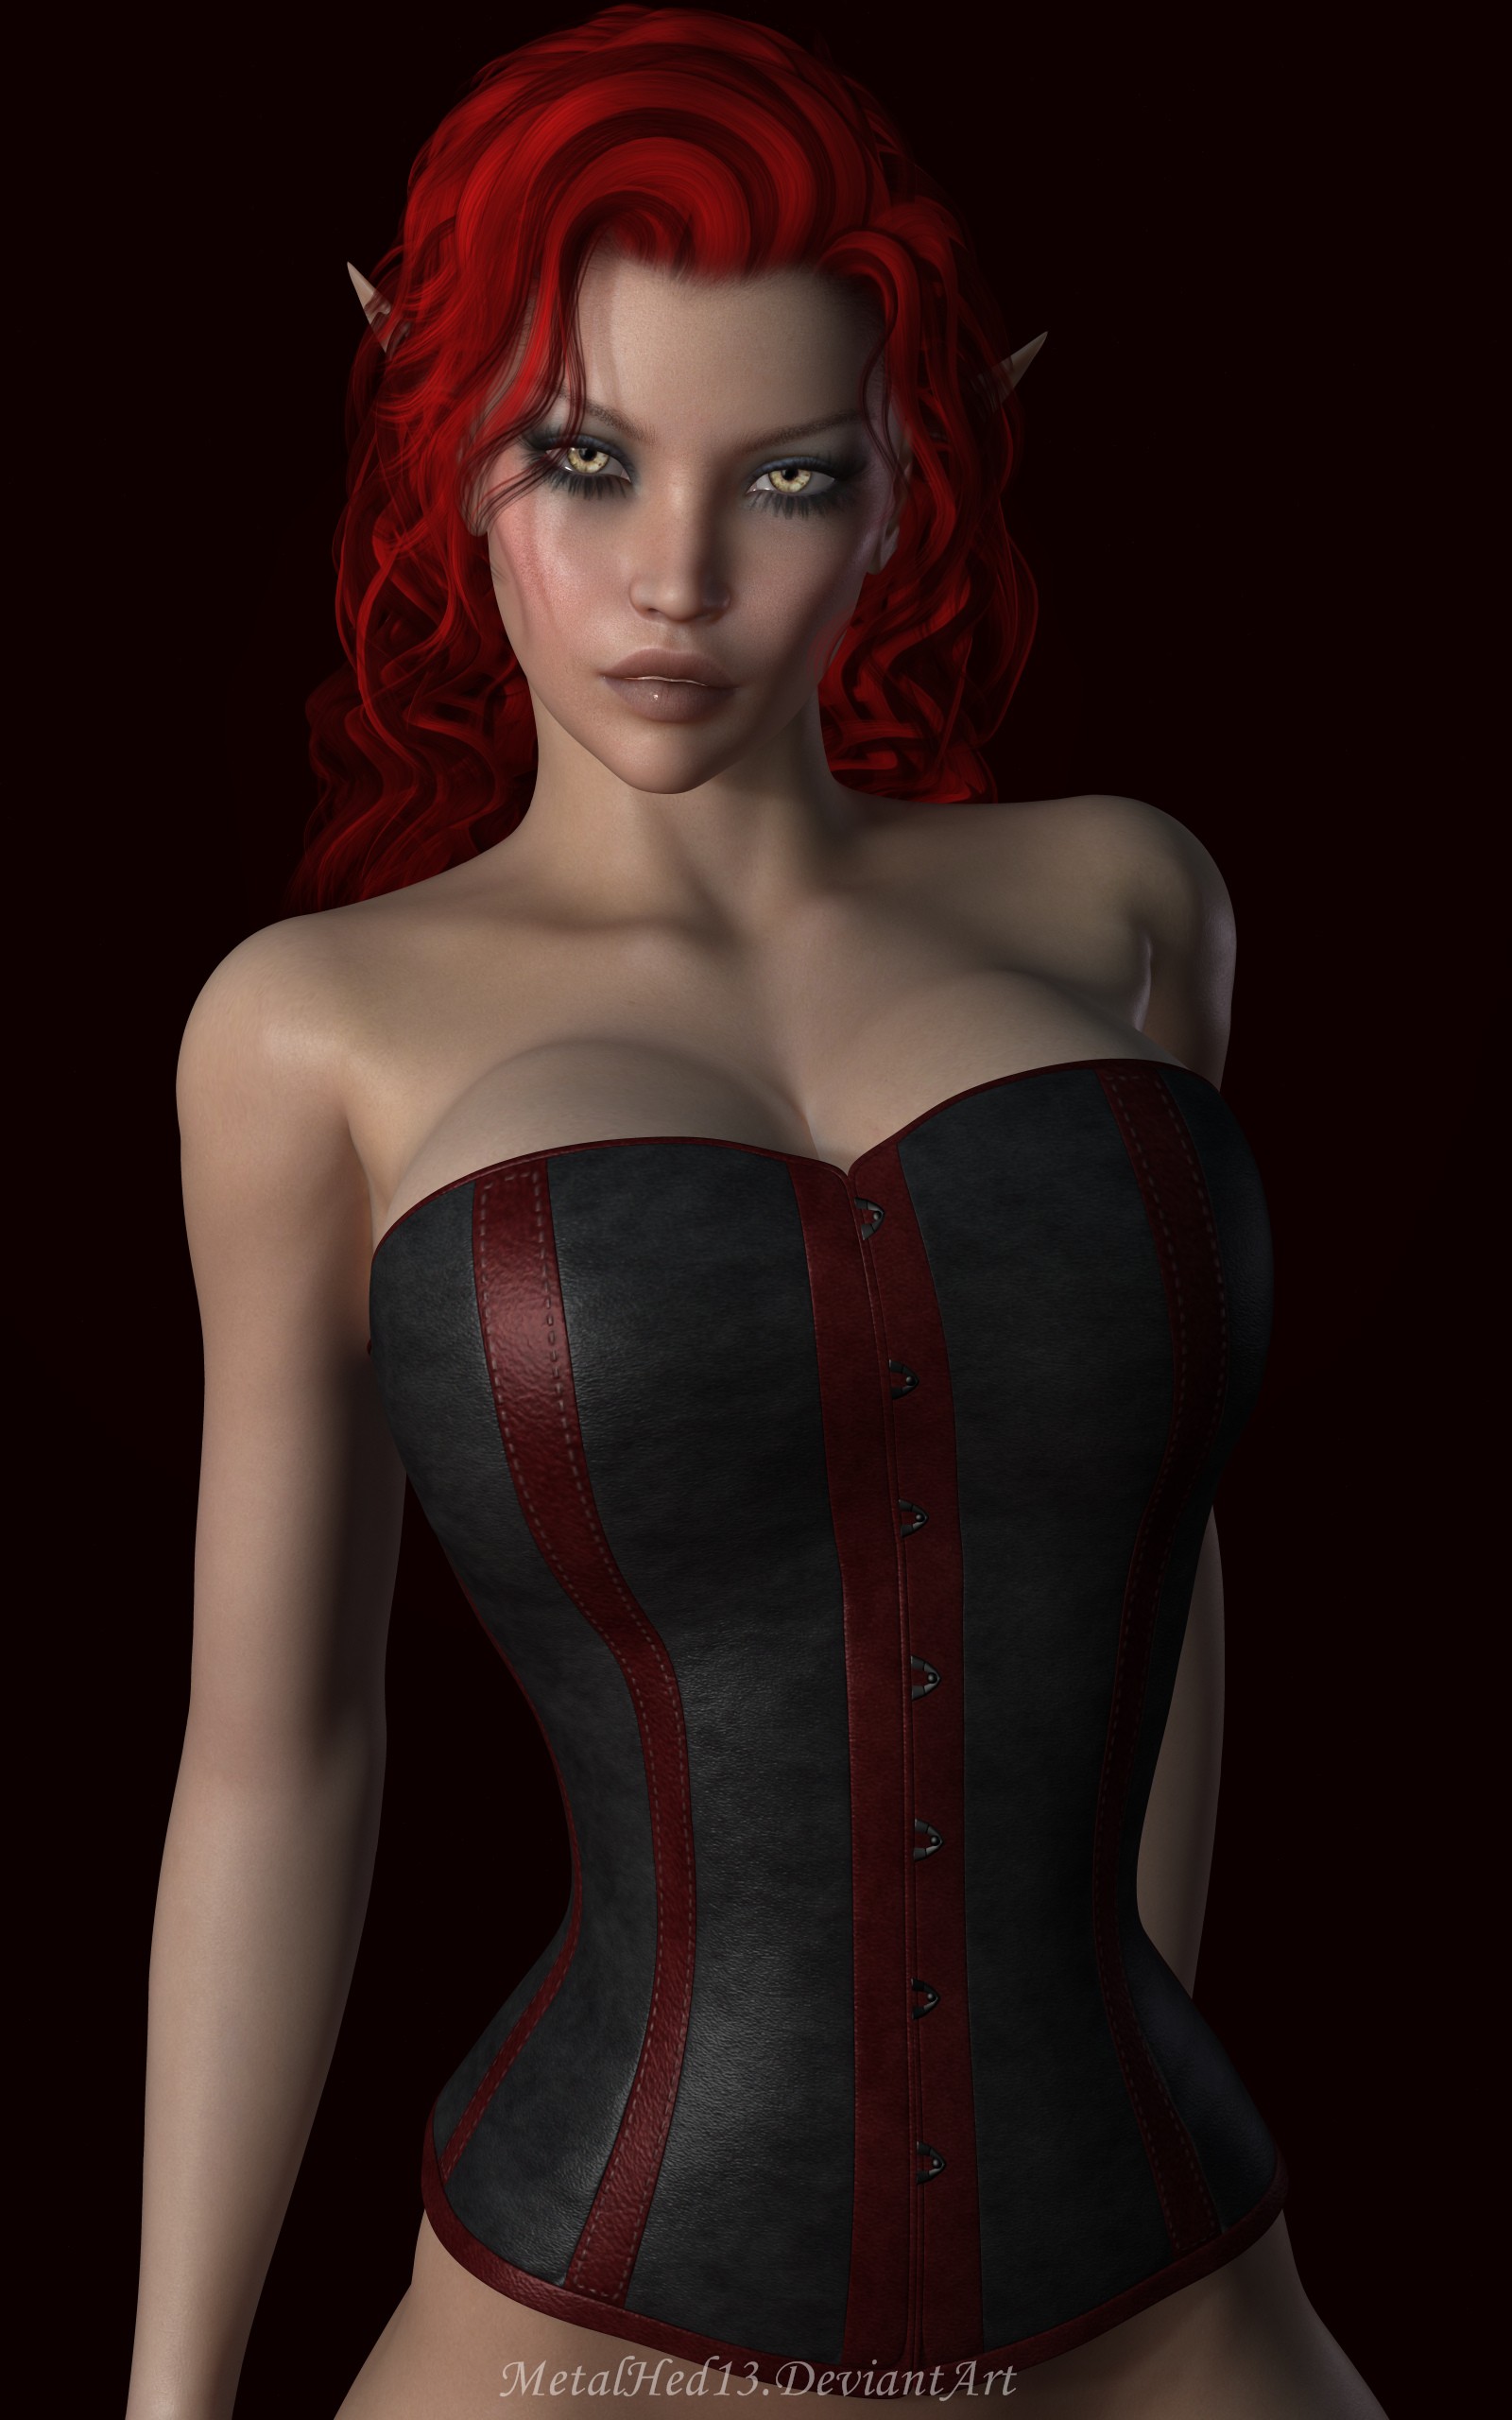 General 1600x2560 CGI metalhed13 3dx redhead big boobs corset DeviantArt fantasy girl fantasy art pointy ears makeup standing digital art